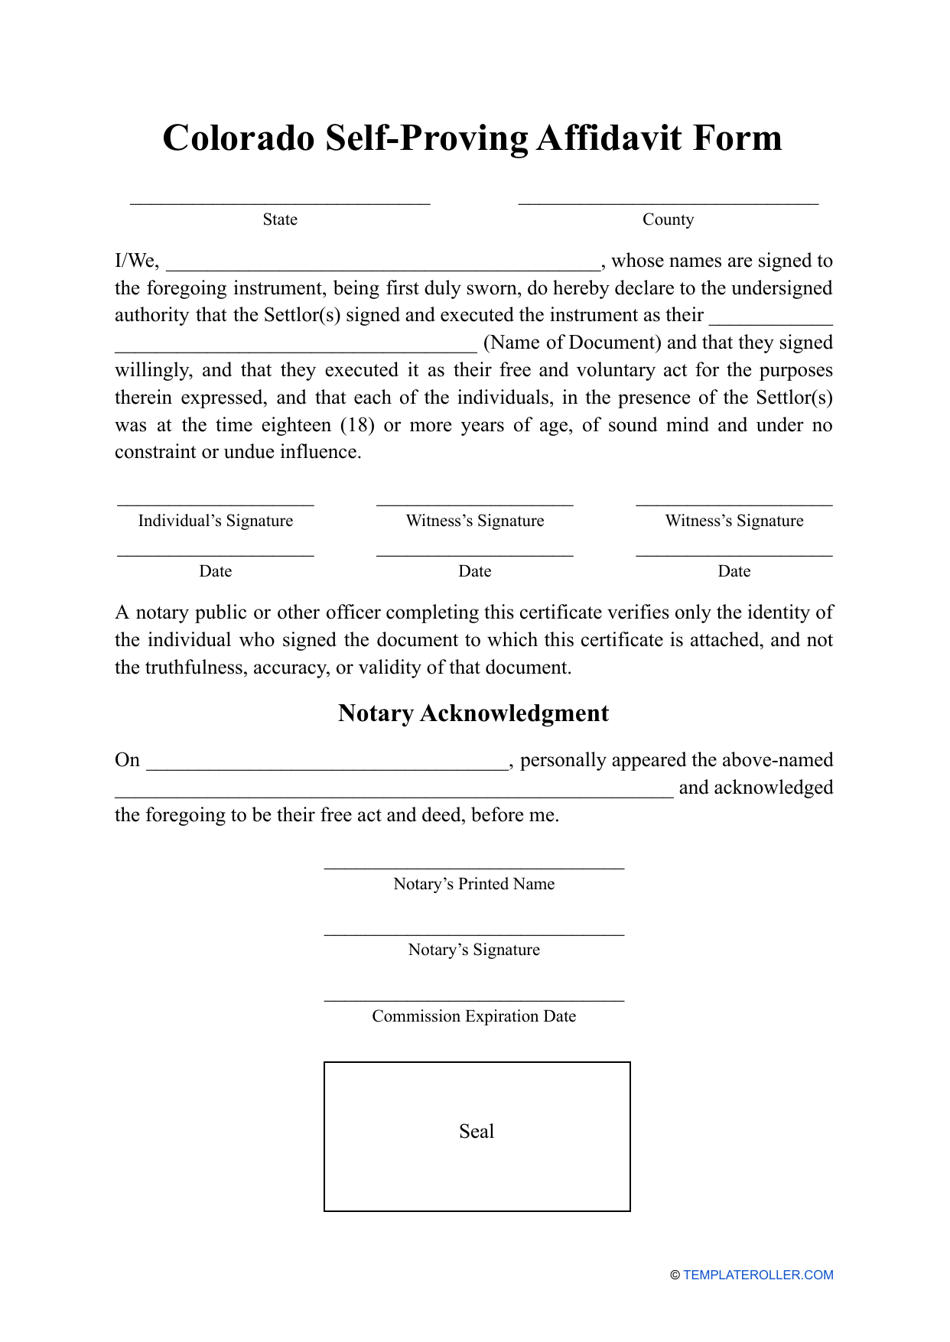 Self-proving Affidavit Form - Colorado, Page 1